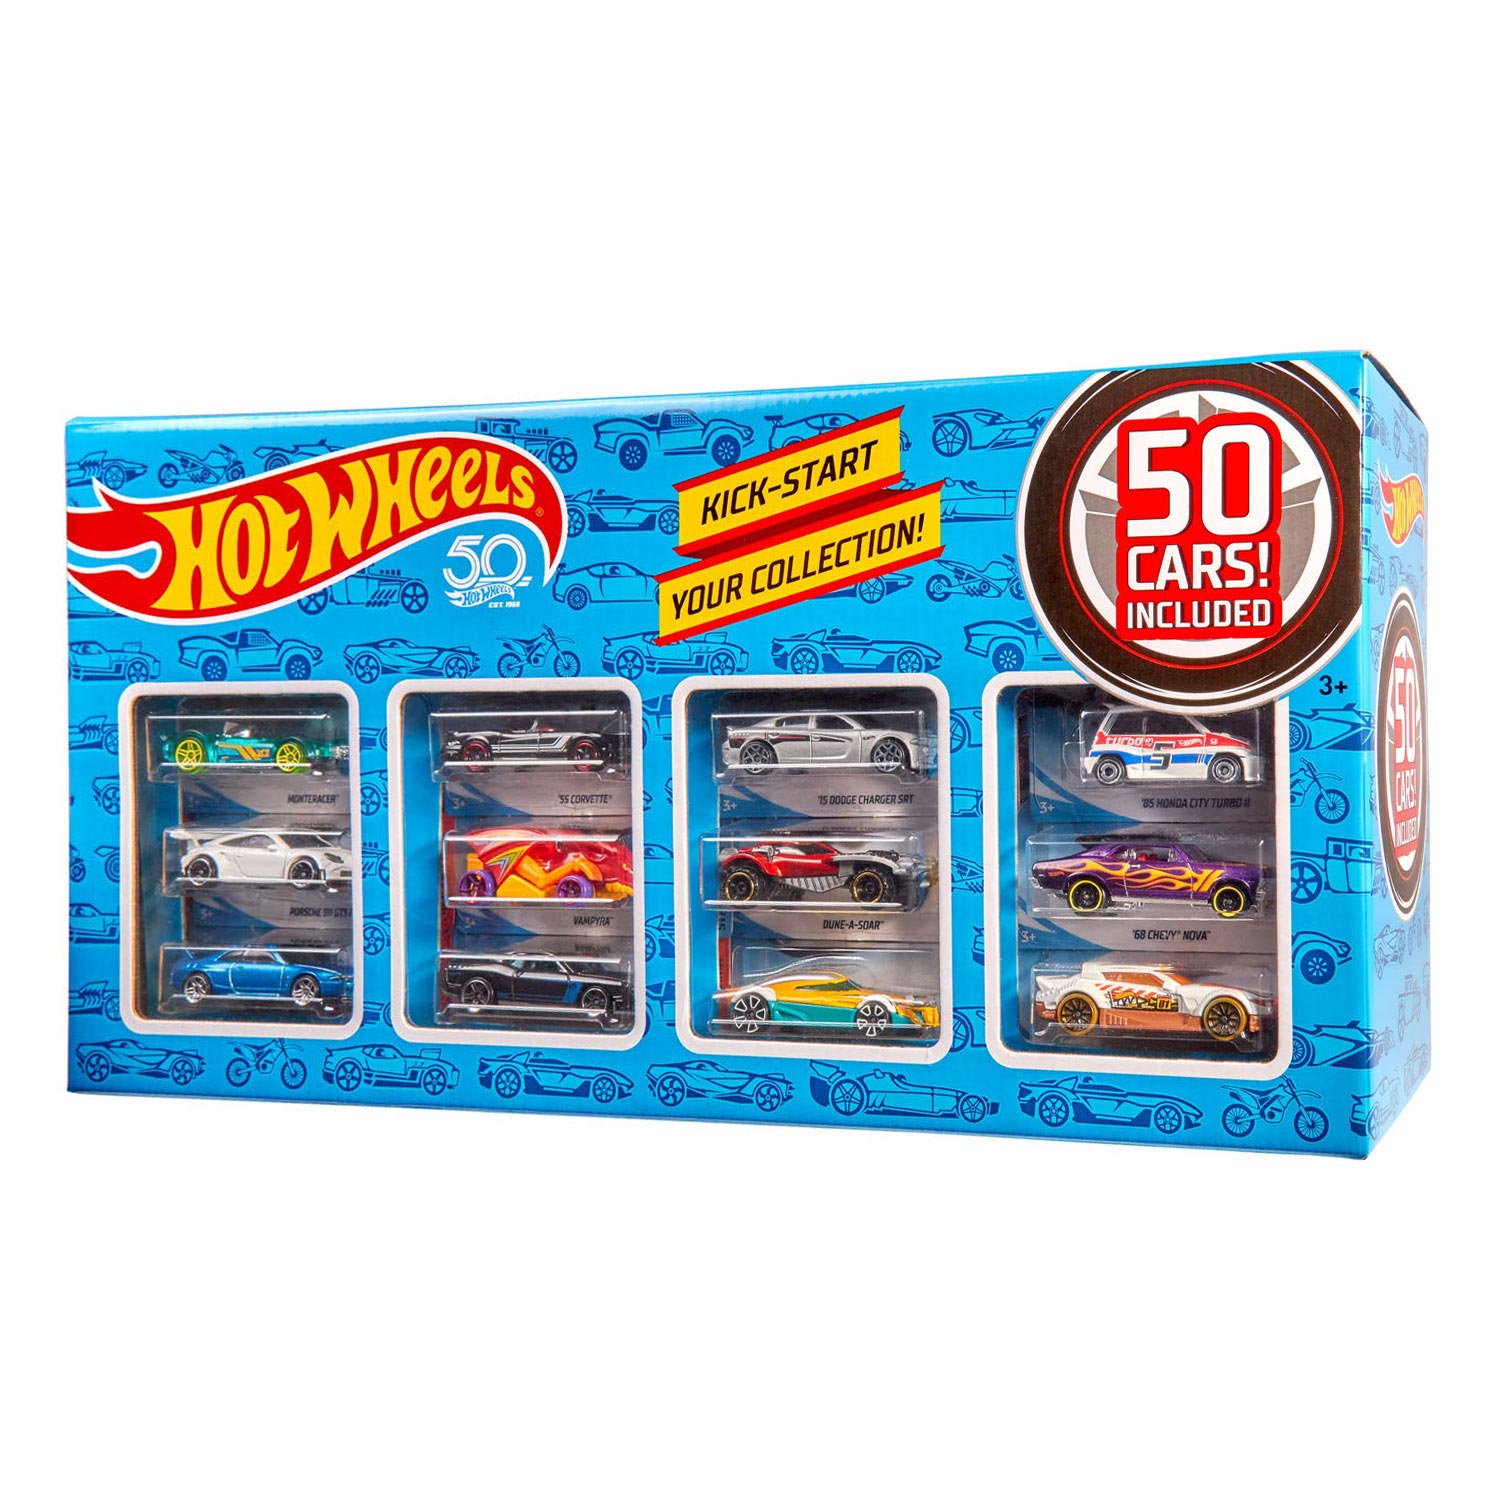 Handel stil Wanten Hot Wheels Gift Set 50 Cars | Thimble Toys